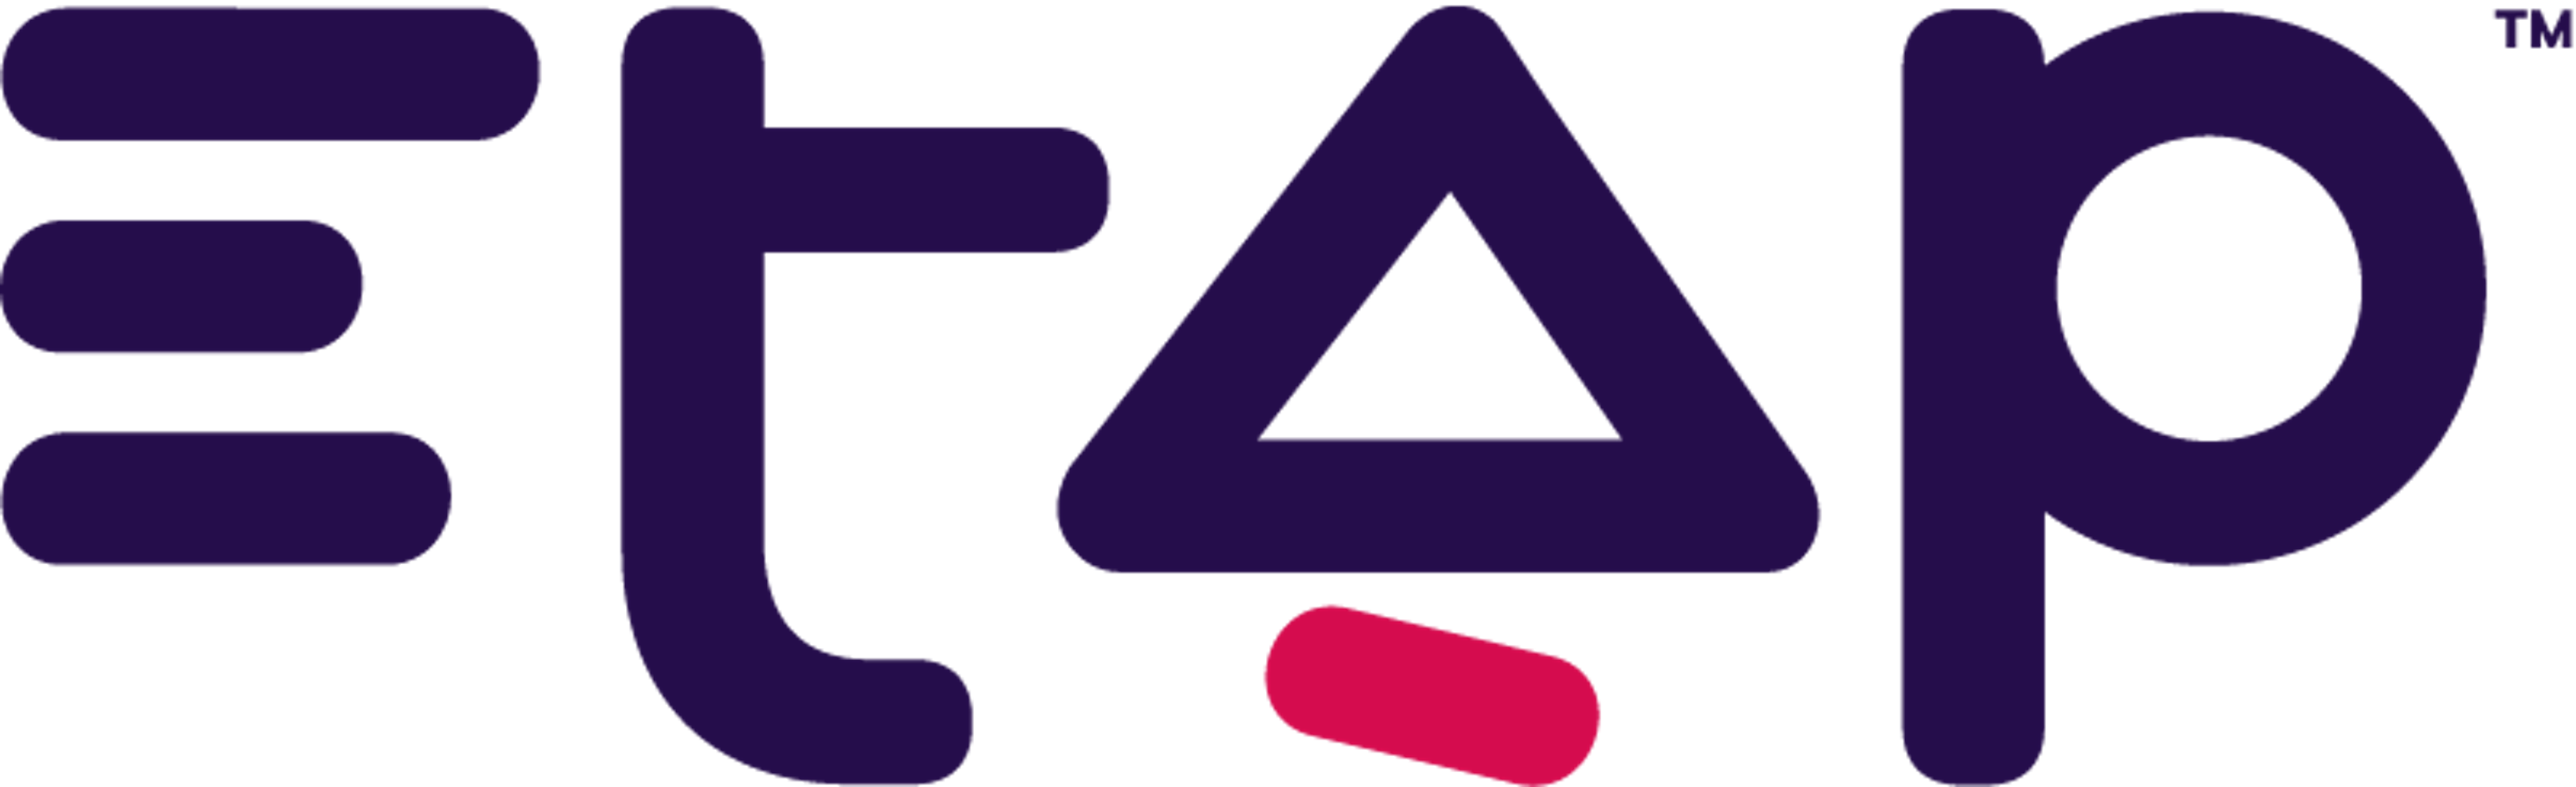 ETAP Car Insurance Company Logo